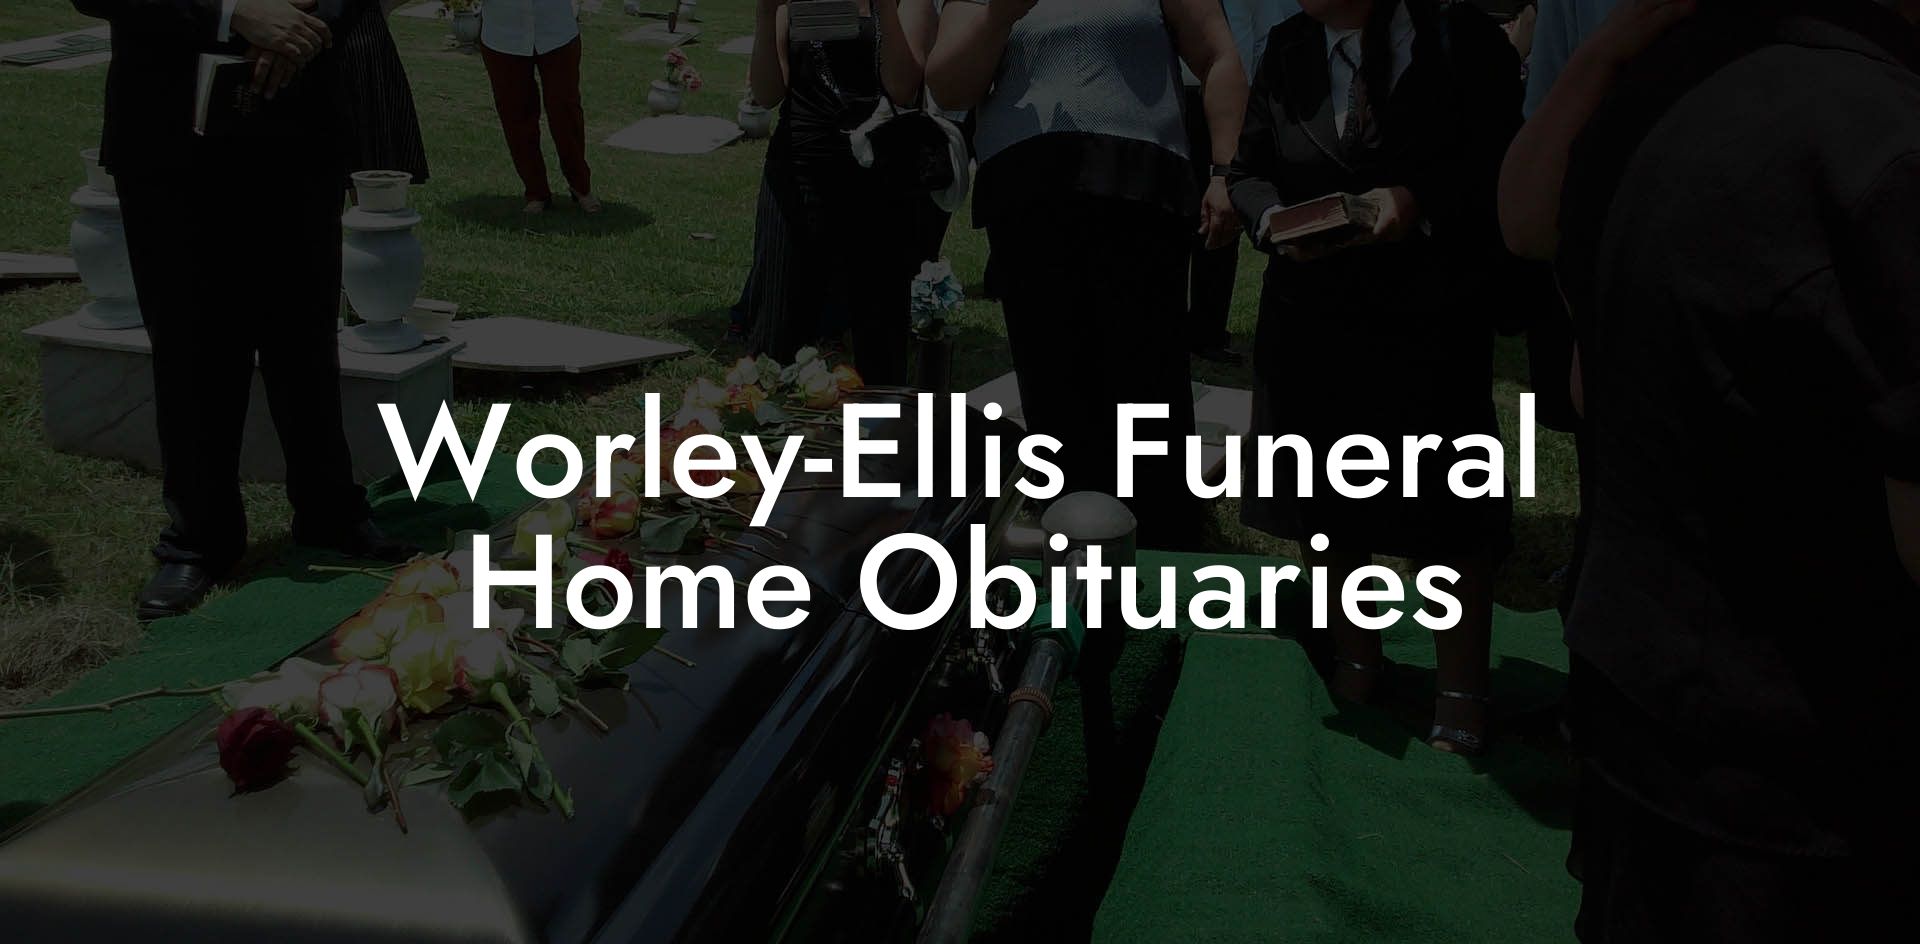 Worley-Ellis Funeral Home Obituaries